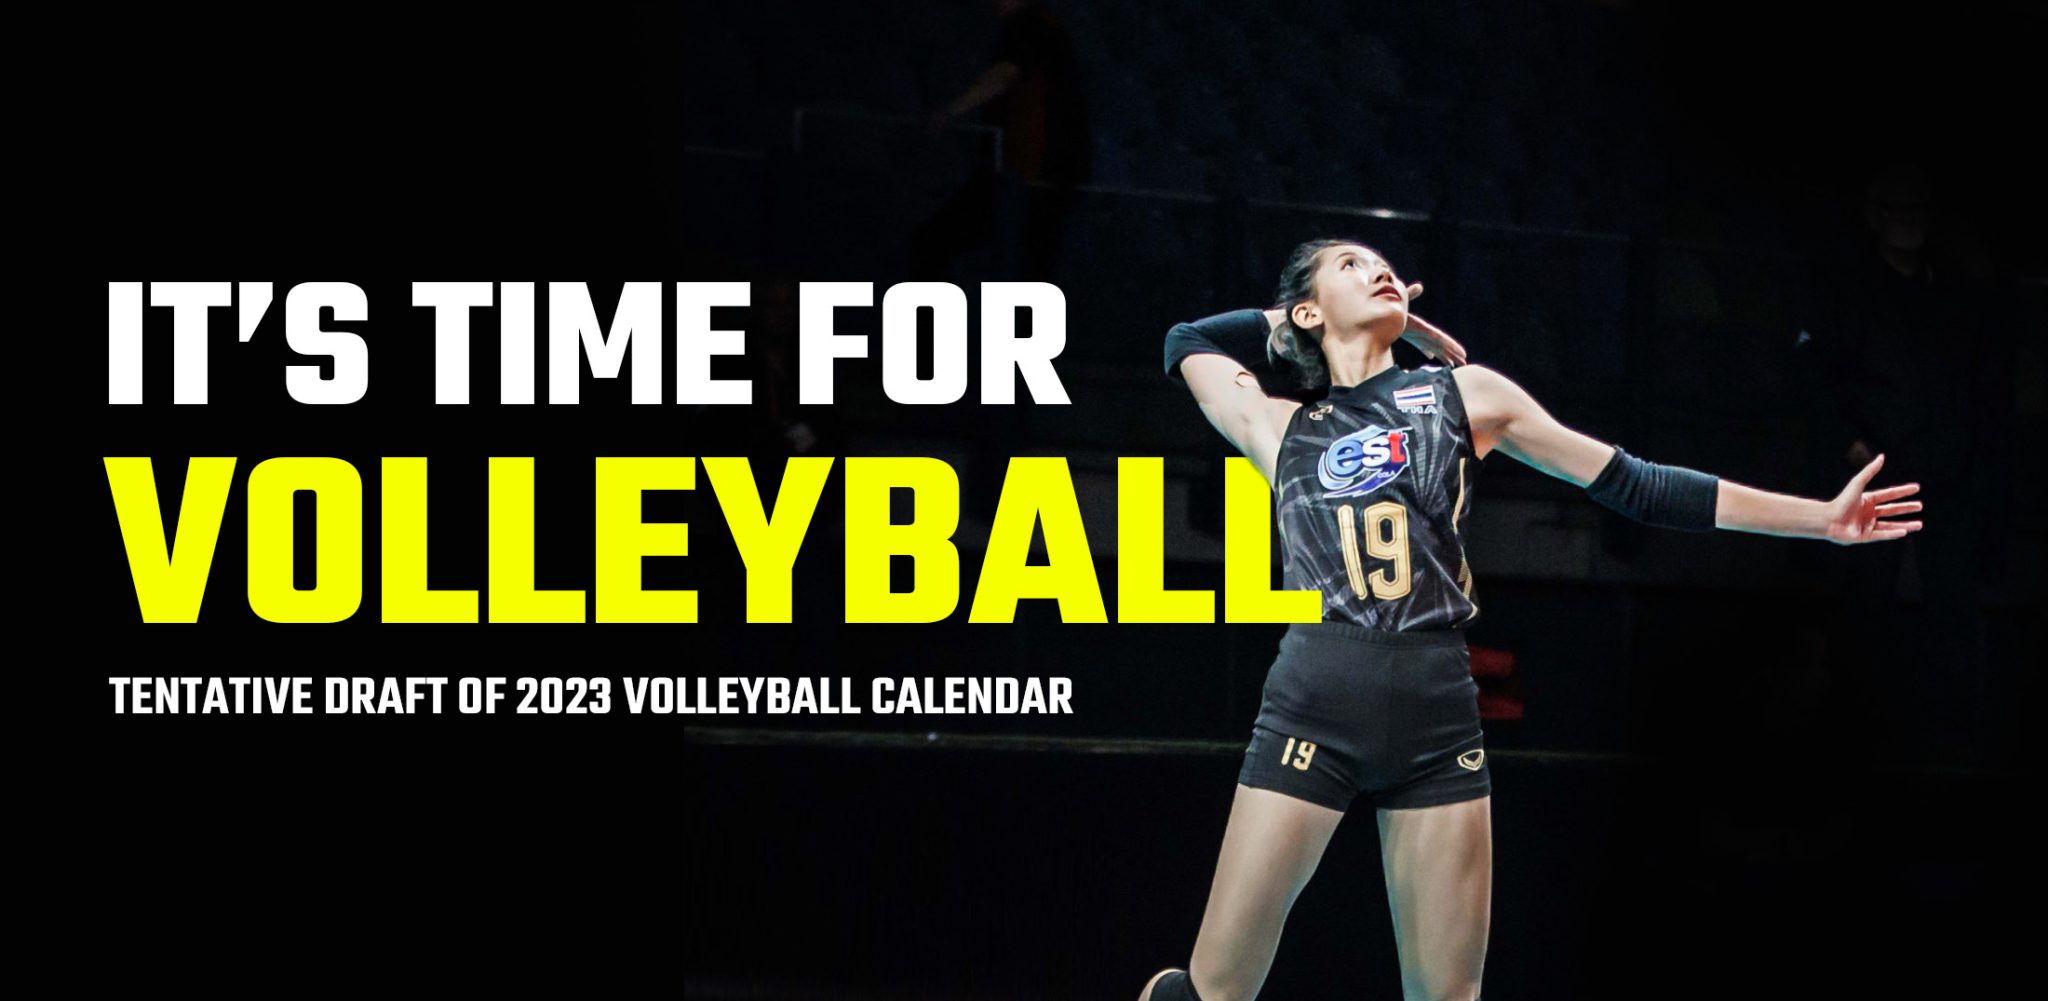 TENTATIVE DRAFT OF 2023 VOLLEYBALL CALENDAR Asian Volleyball